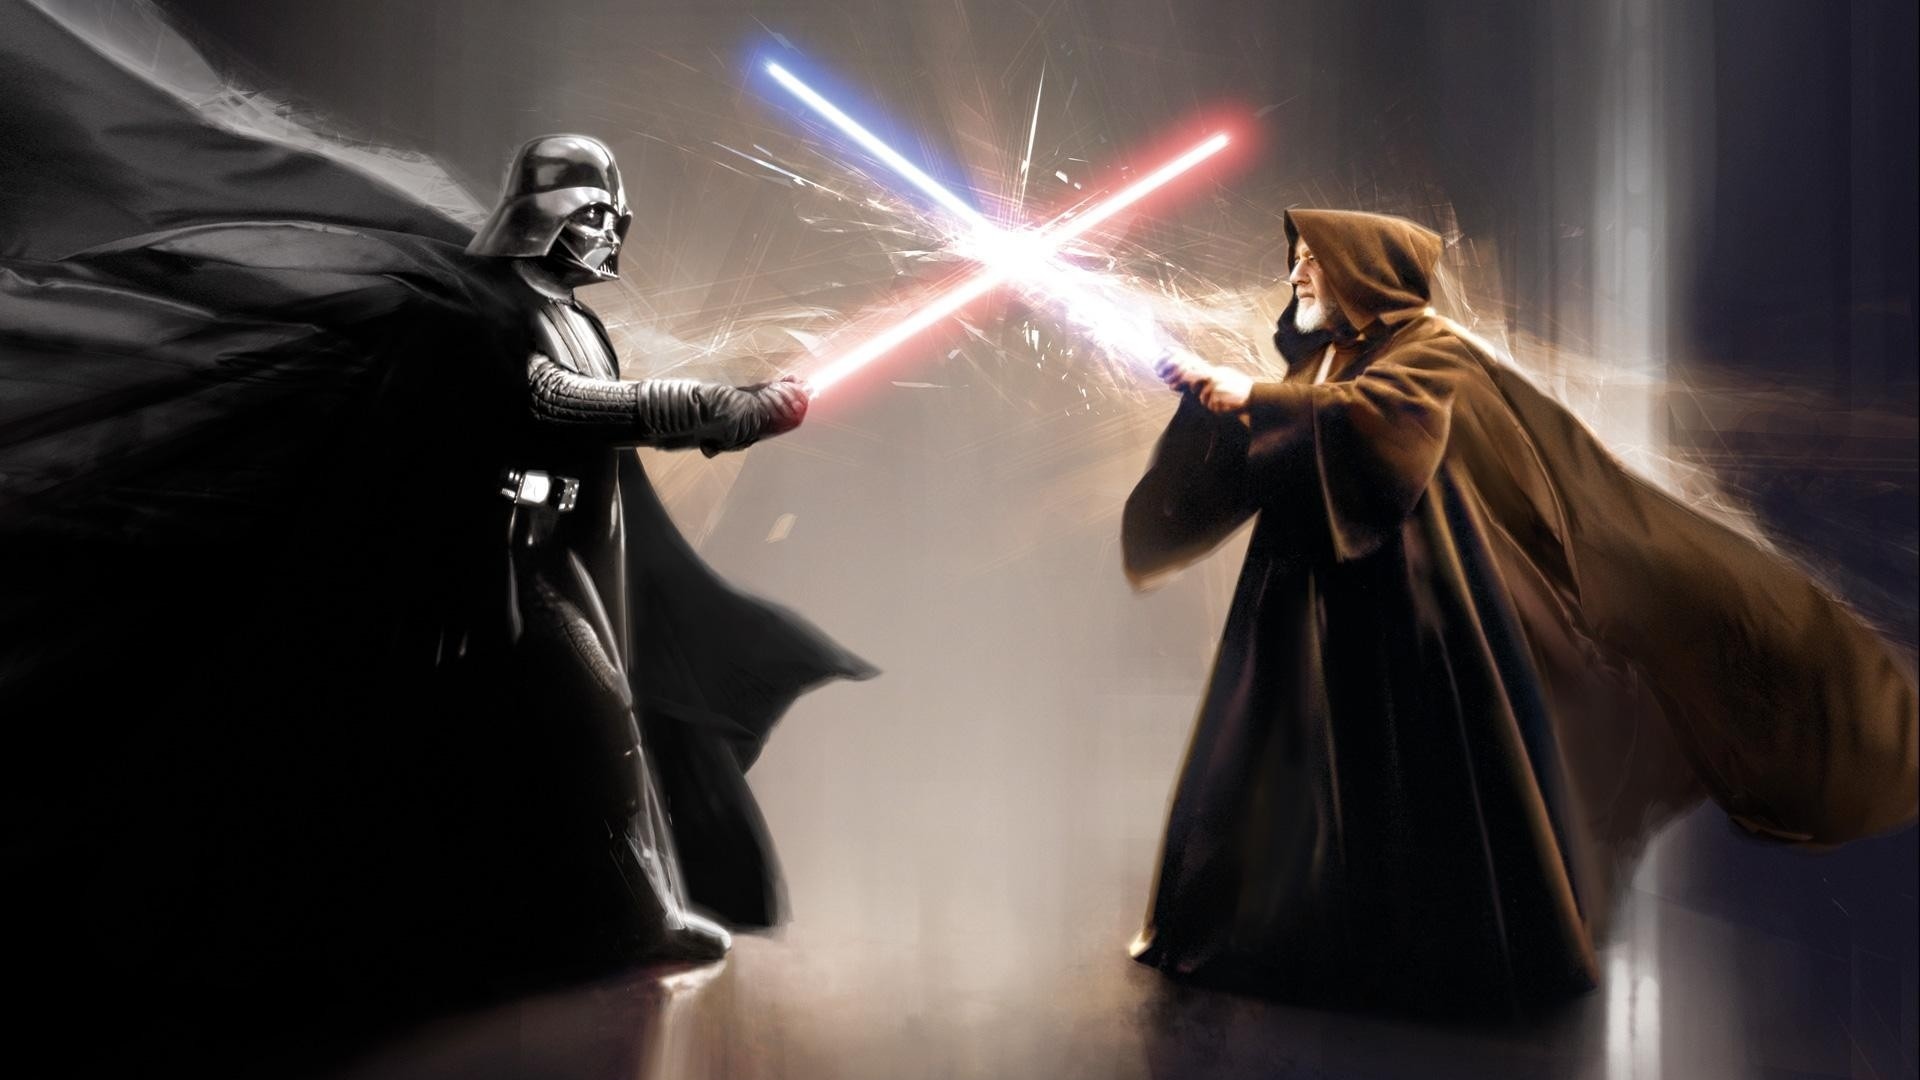 Darth Vader Obi Wan Kenobi movies star wars sci fi weapons lightsaber 1920x1080